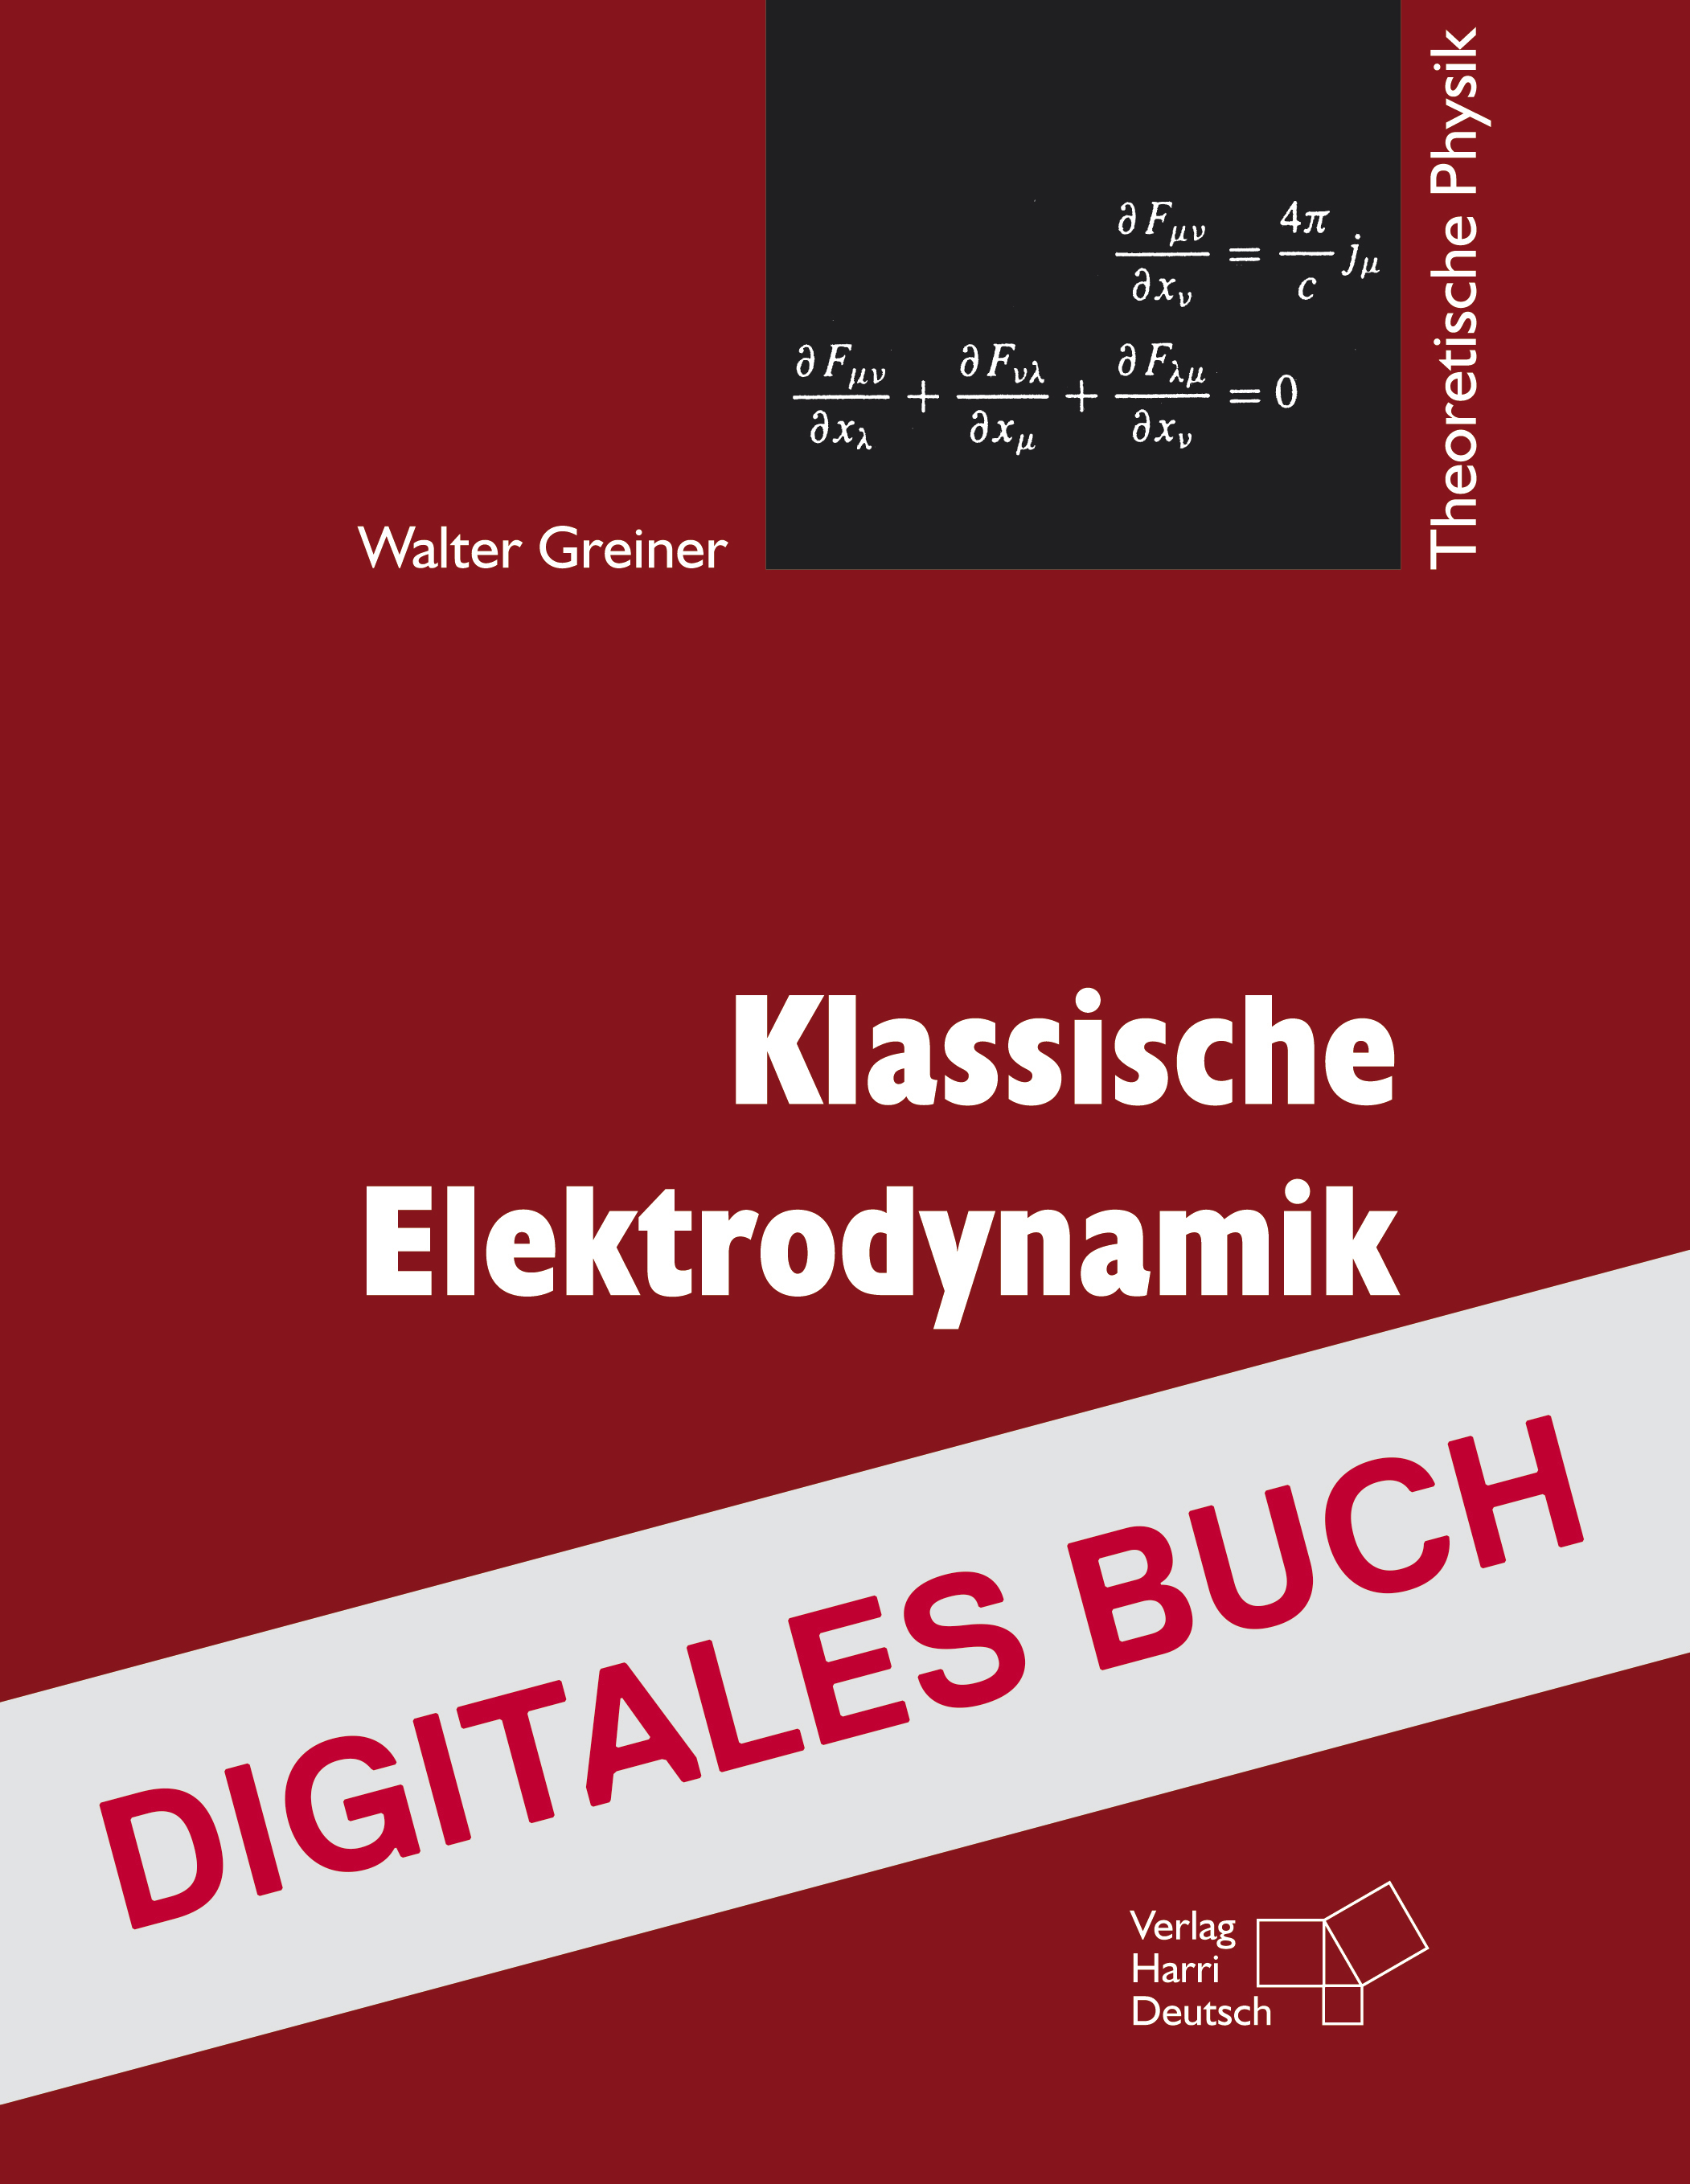 Klassische Elektrodynamik - Digitales Buch